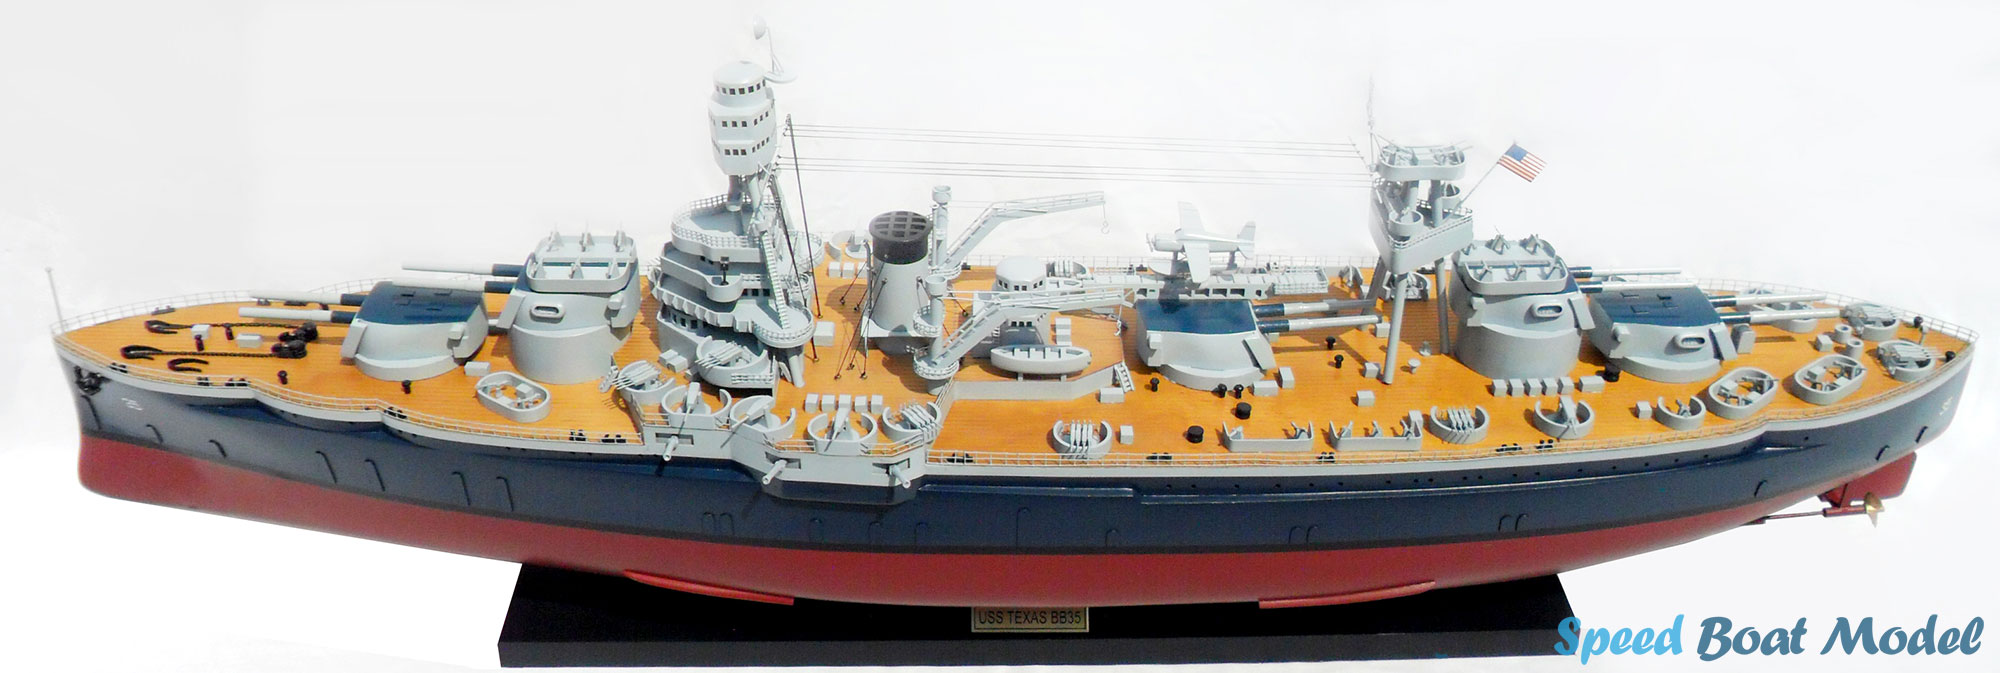 Uss Texas (bb-35) Warship Model